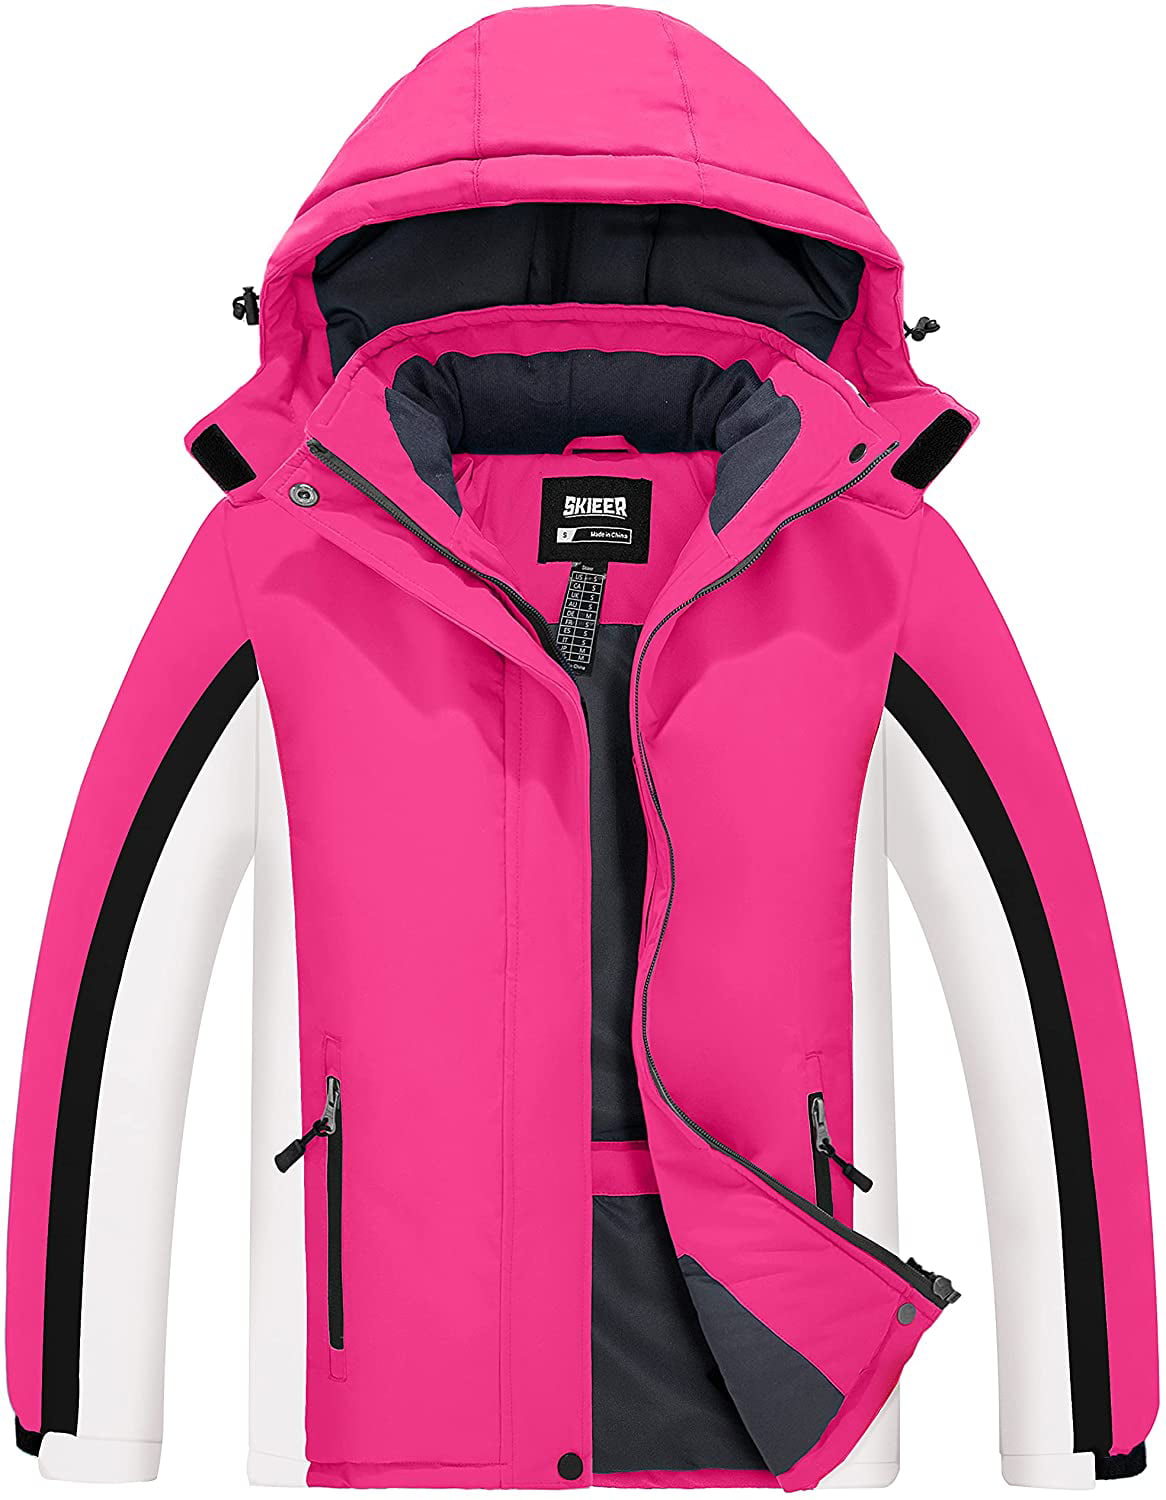 Skieer Women's Waterproof Ski Jacket Warm Winter Snow Coat Windproof Hooded Rain Jacket 